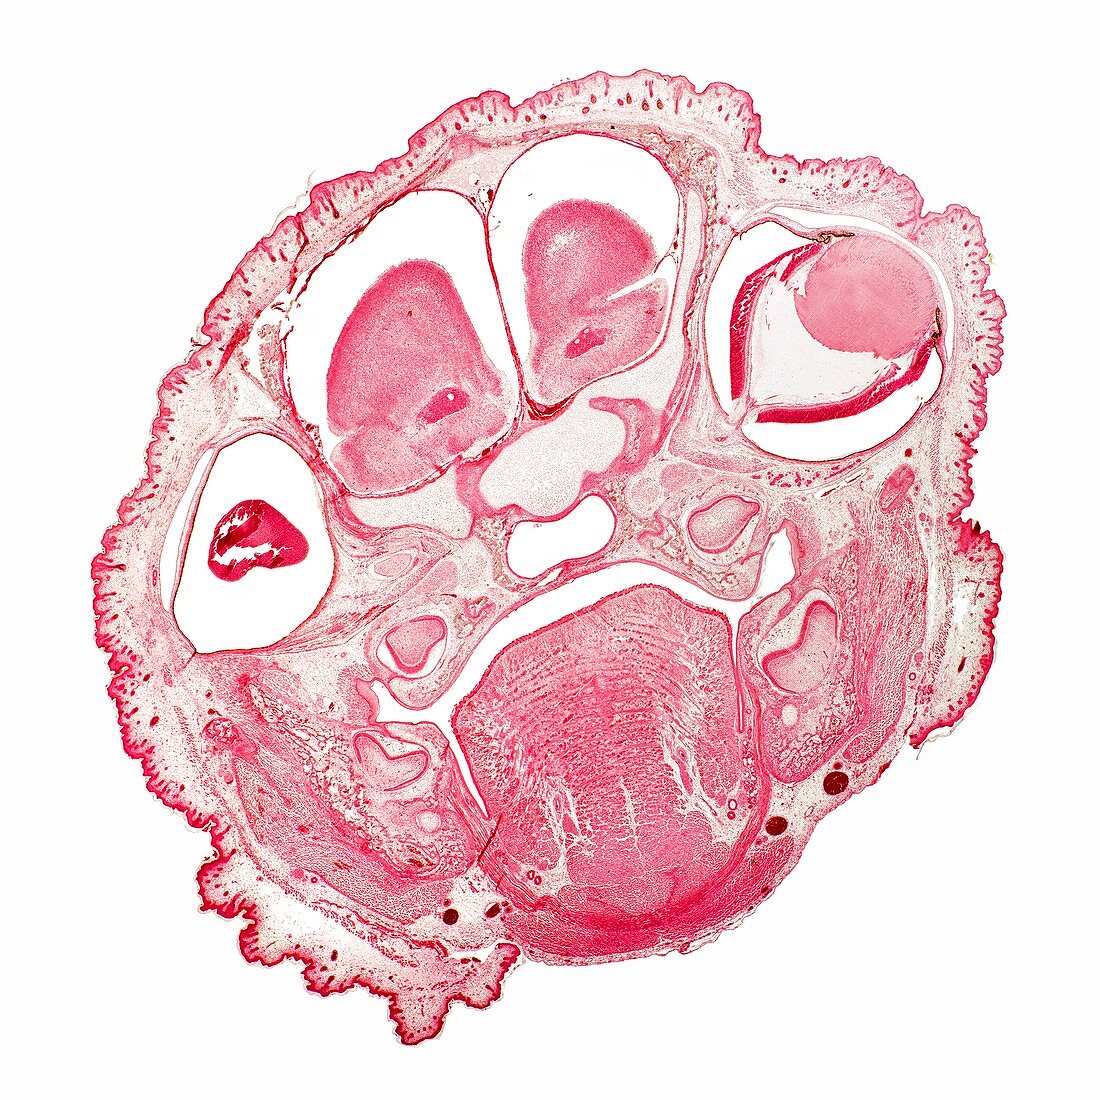 Foetal rat head,light micrograph